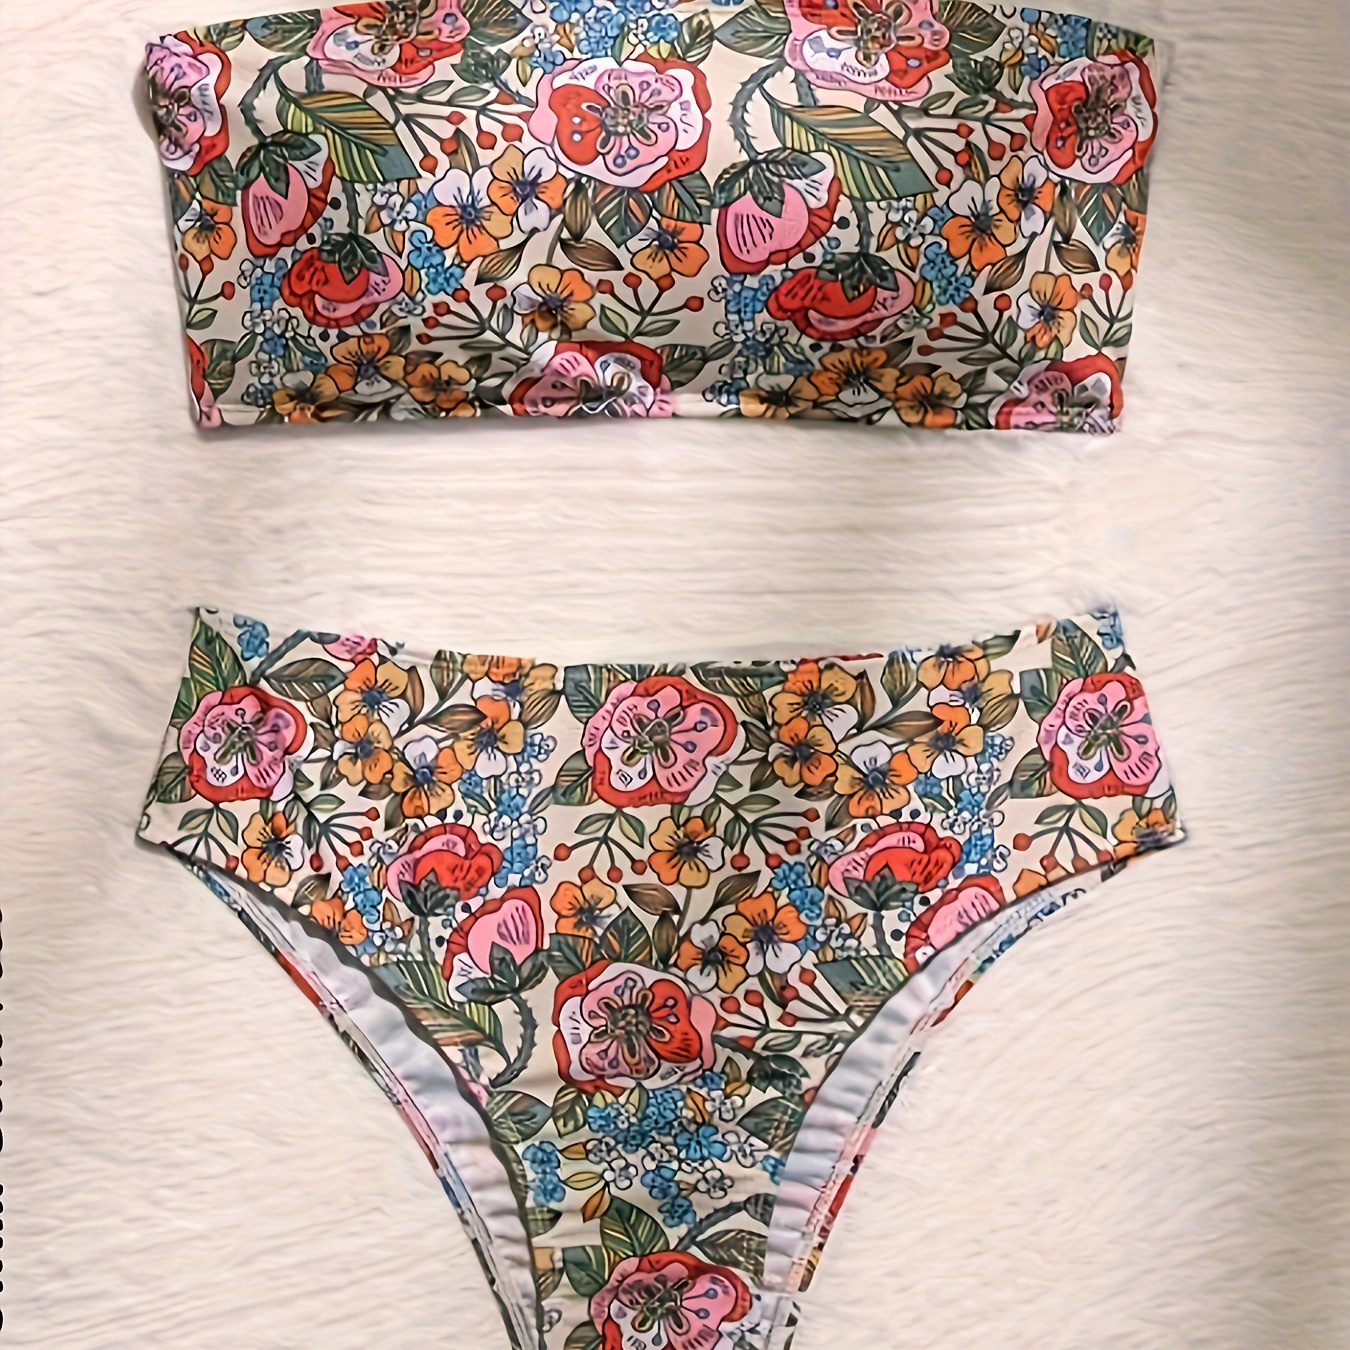 

Women's Floral Print Bikini Set, Two-piece Swimsuit, High Cut Bottom, Bandeau Top With Tie Detail, Beachwear, Swimwear, Summer Fashion, Colorful Flower Pattern